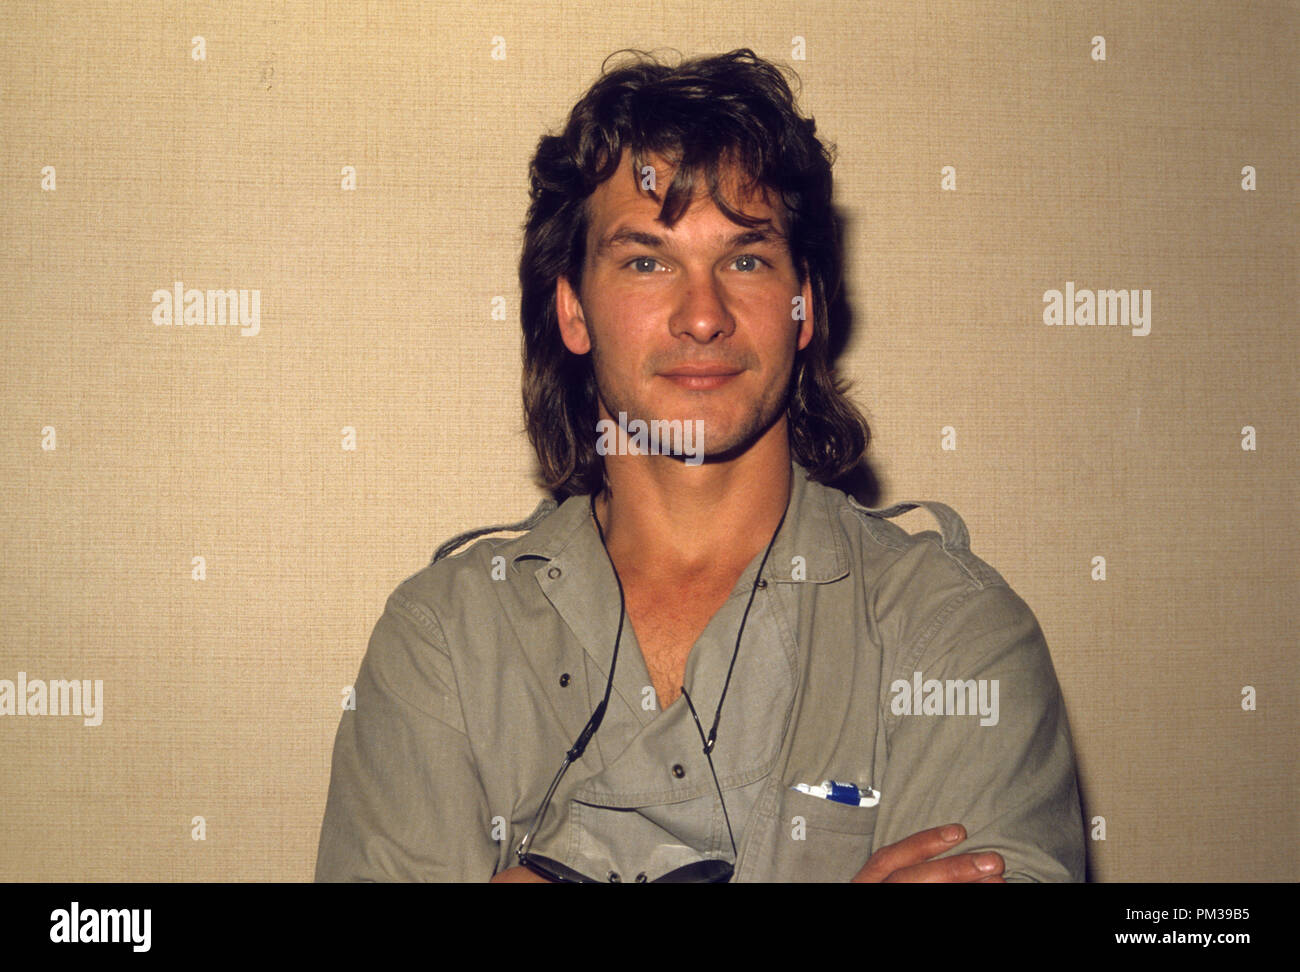 Patrick Swayze, circa 1991.  File Reference # 1288 009JRC Stock Photo